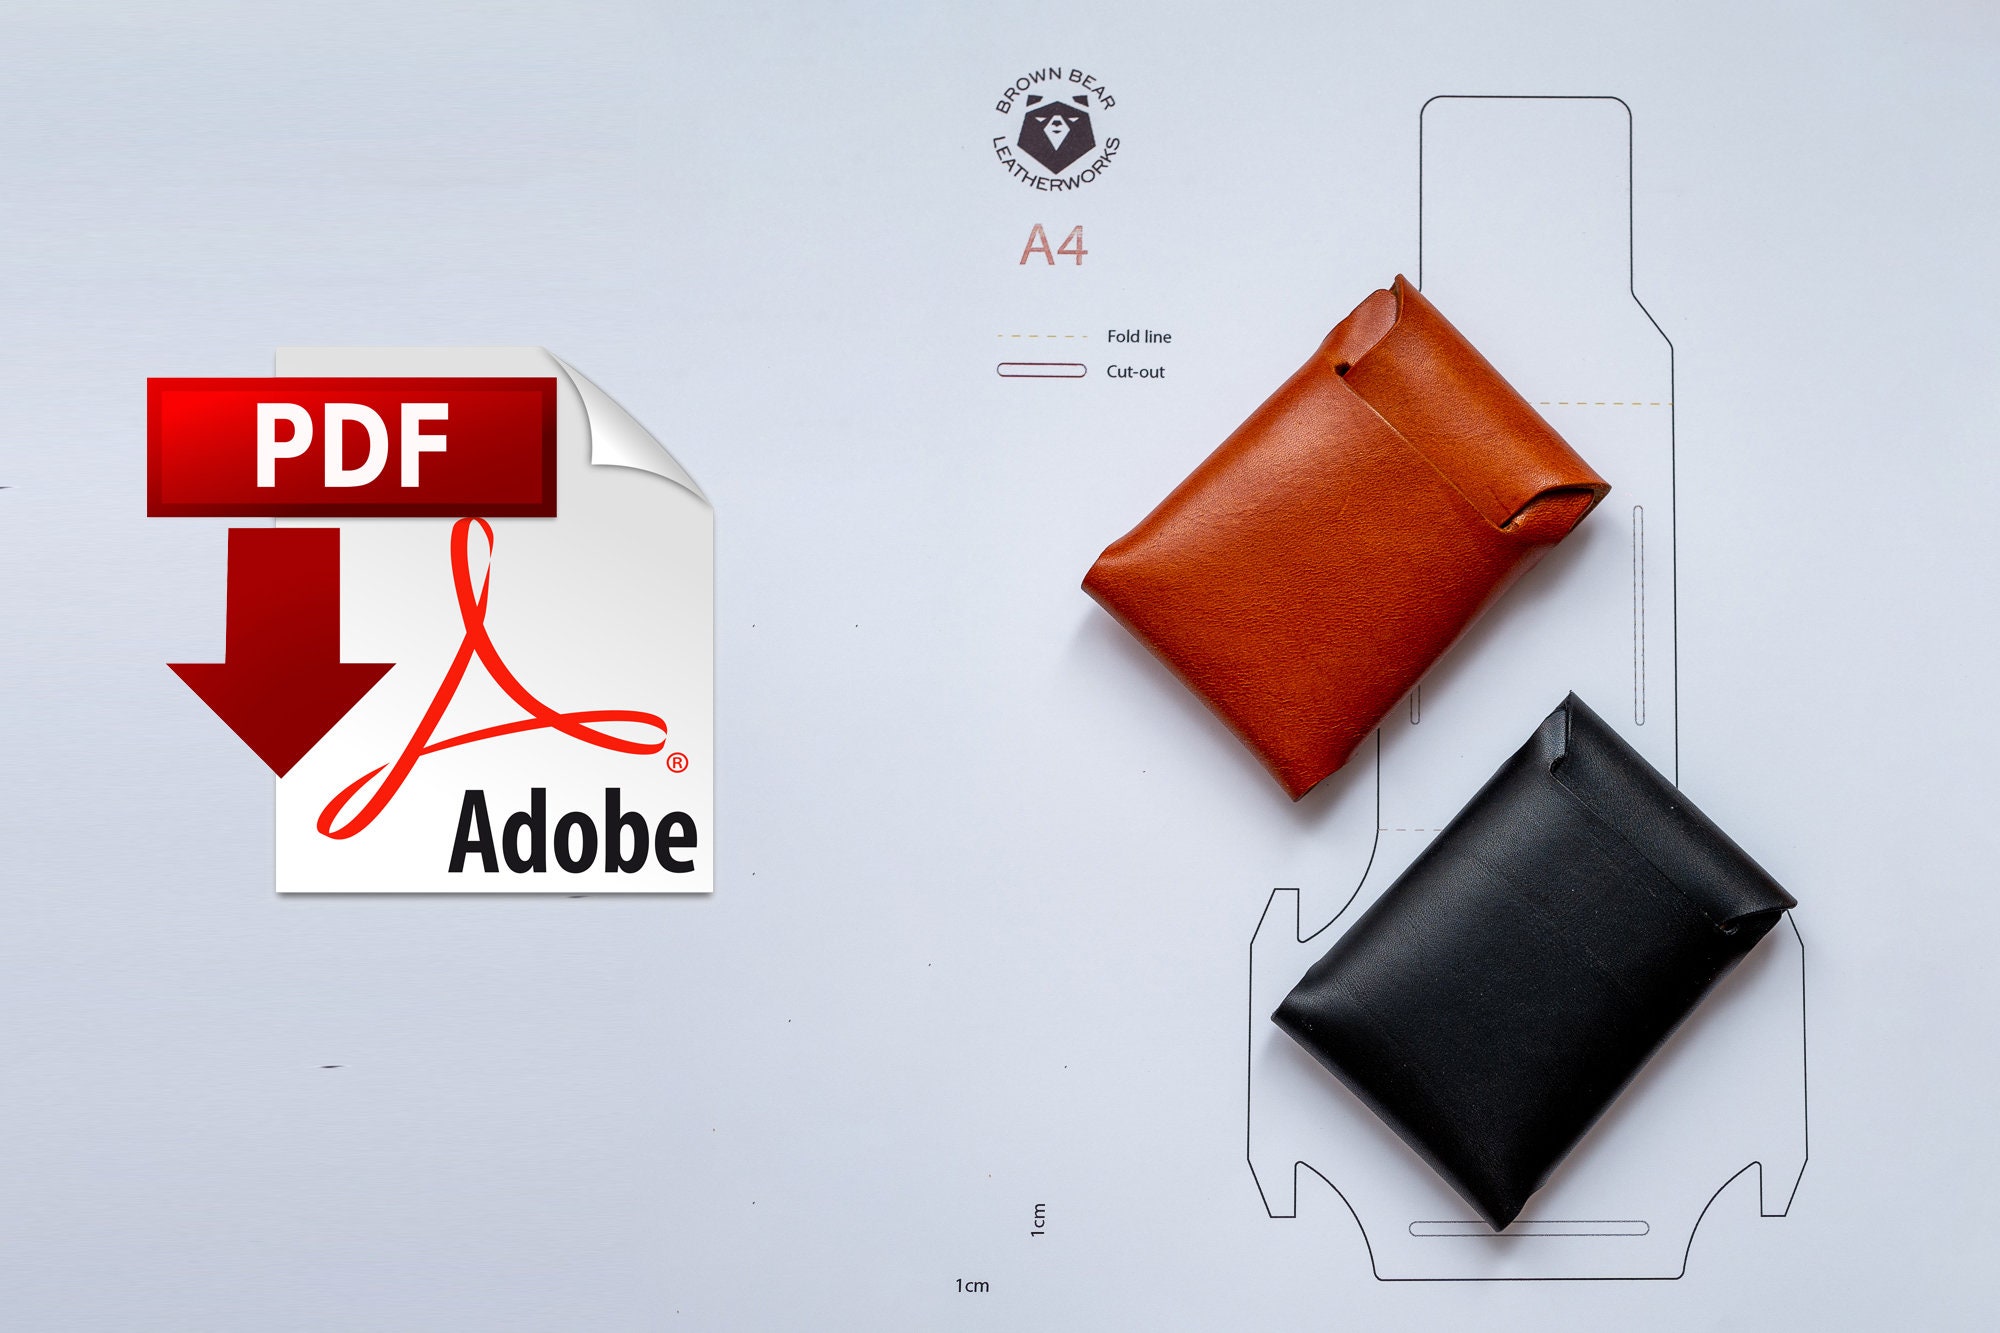 Origami Compact Wallet Monogram – Keeks Designer Handbags